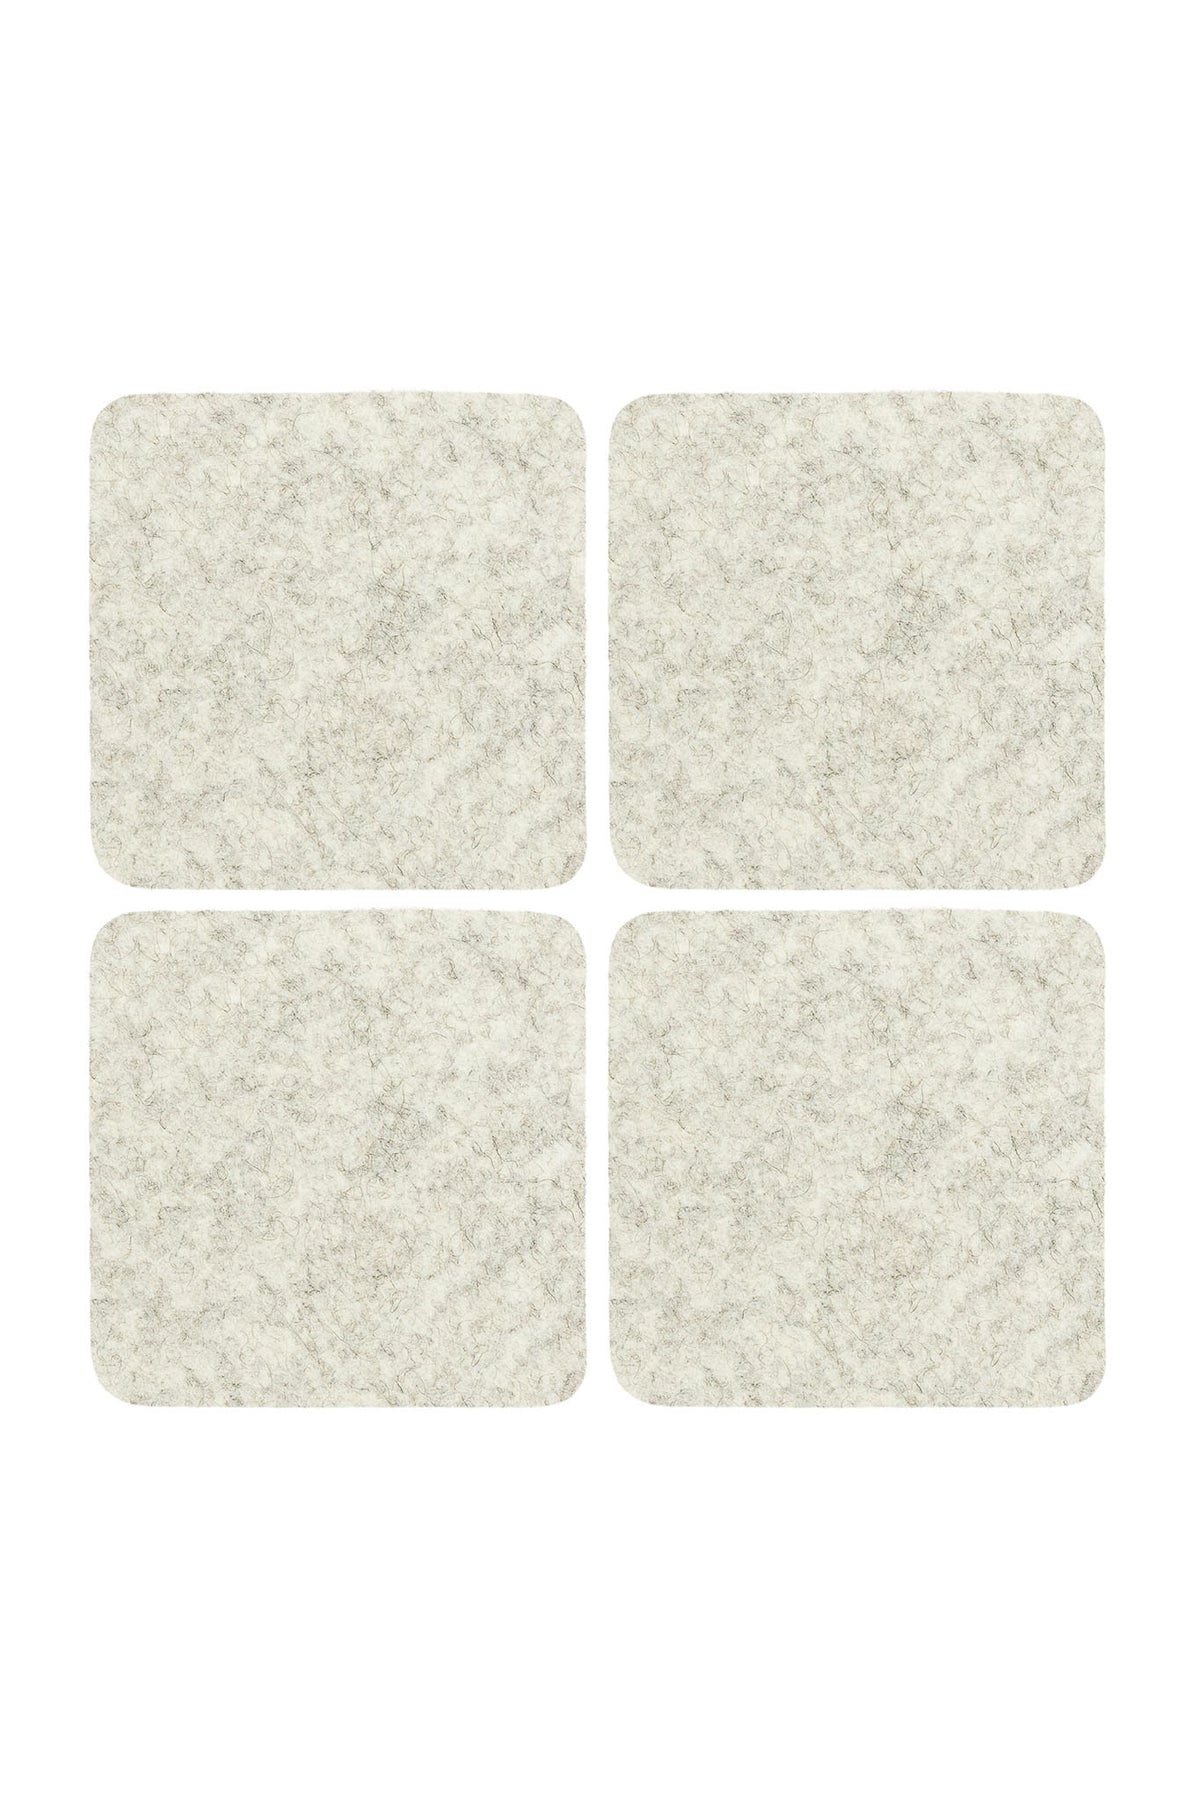 Wool Felt Square Coasters, White, Set of 4